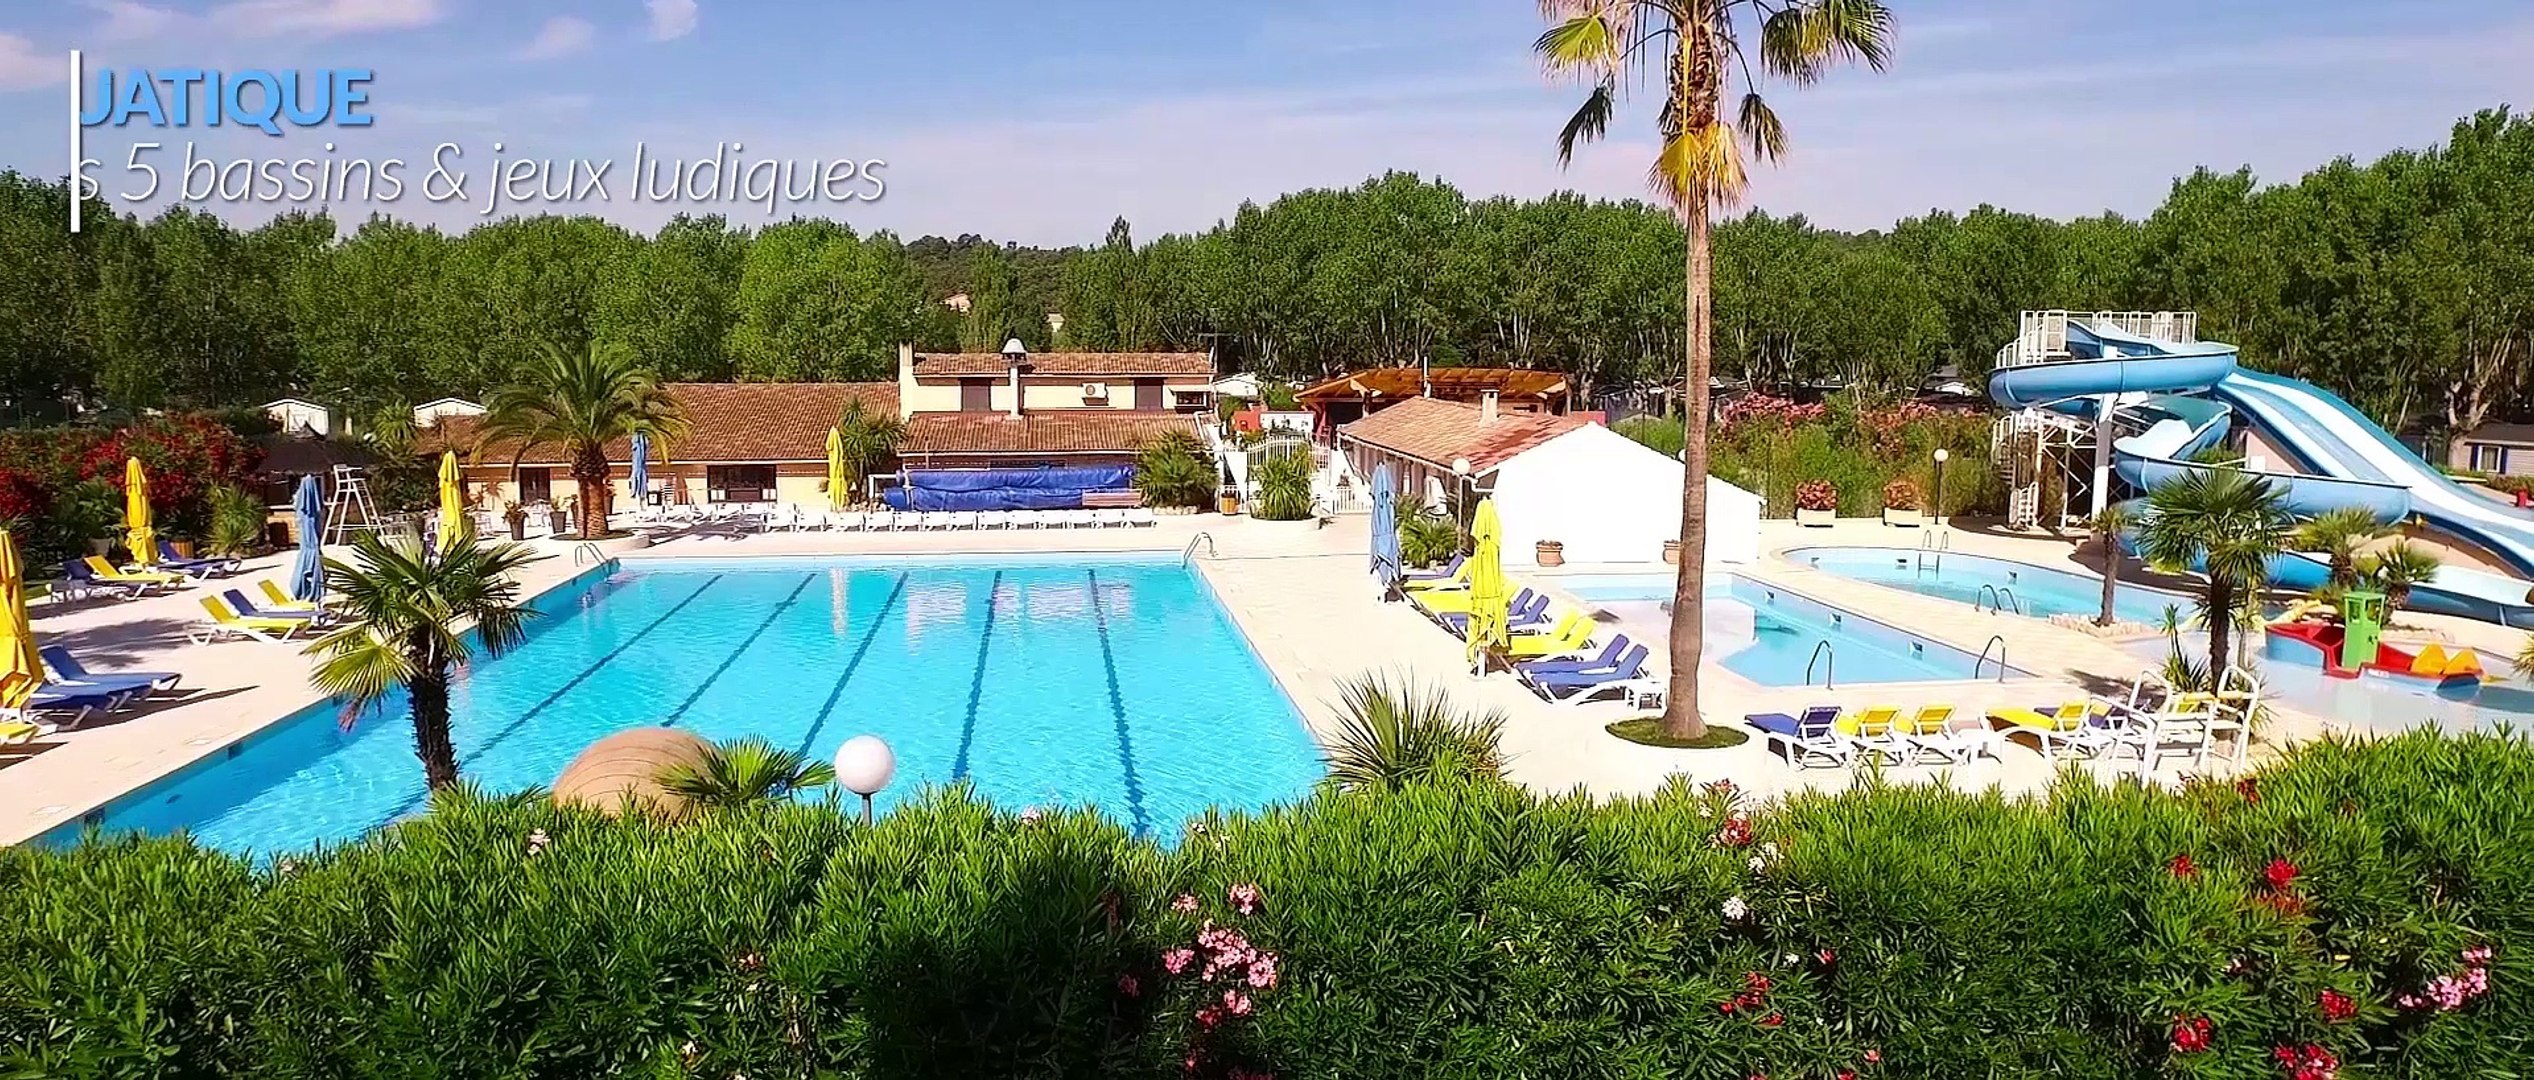 Camping Côte d'Azur - Sandaya Riviera d'Azur à Saint Aygulf - Camping  Fréjus - Var - Vidéo Dailymotion